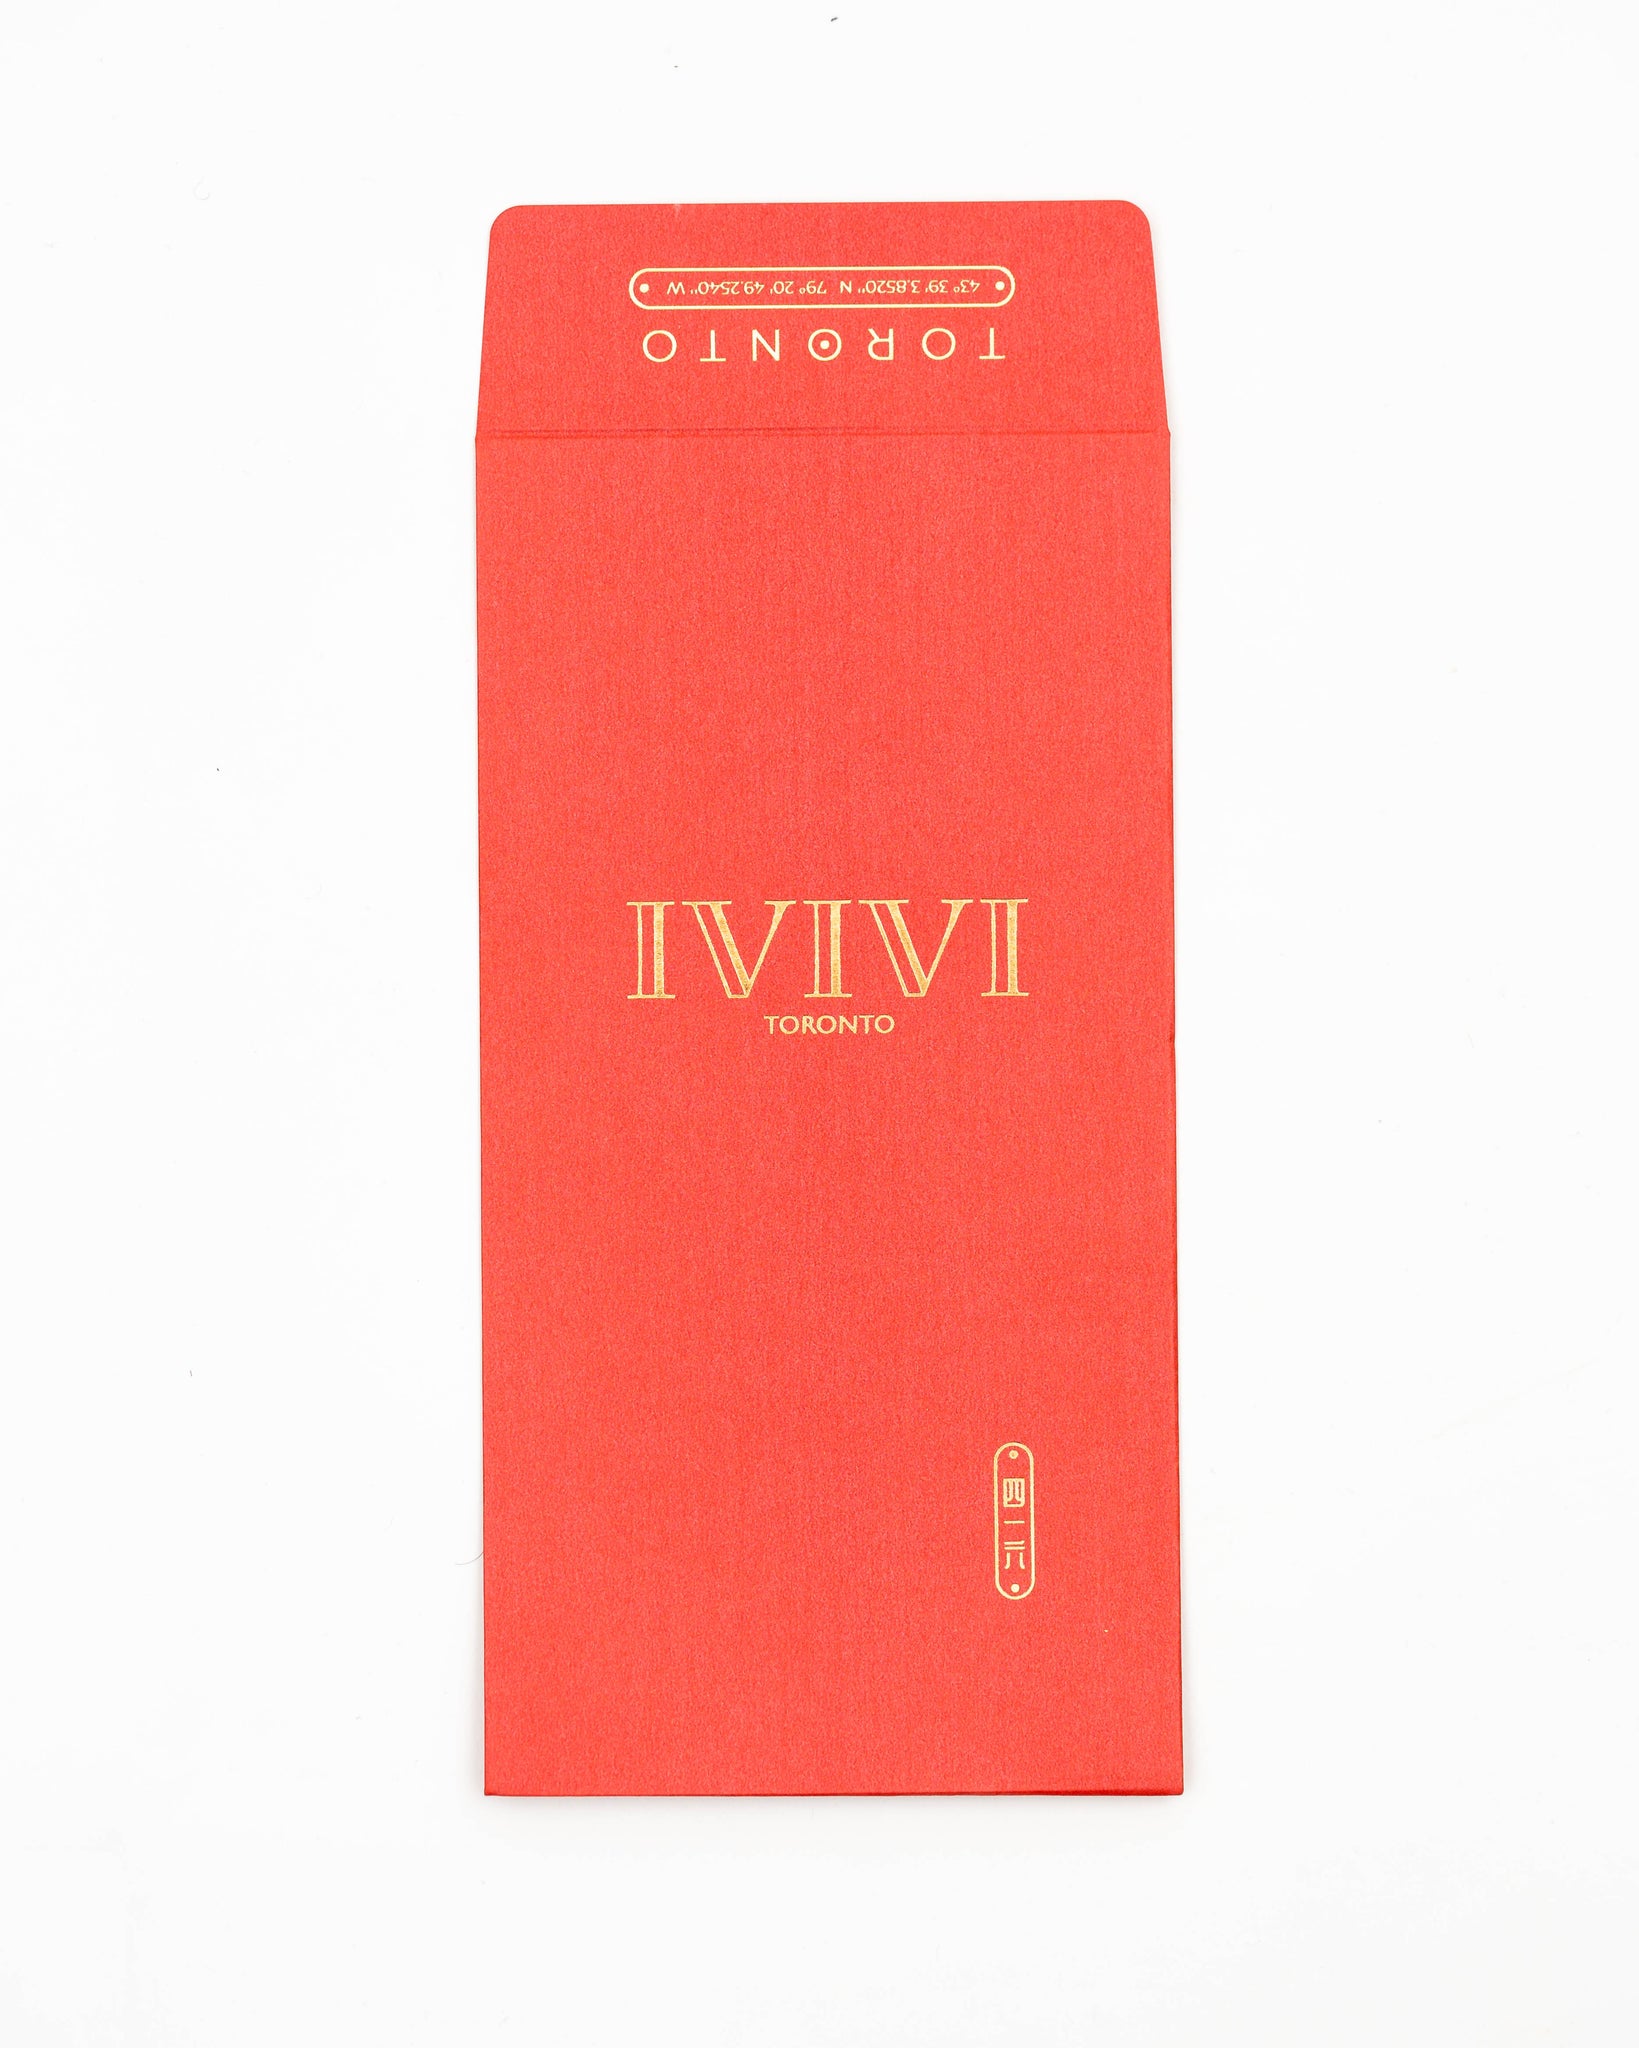 IVIVI Friends & Family Red Envelope hóngbāo – IVIVI Toronto